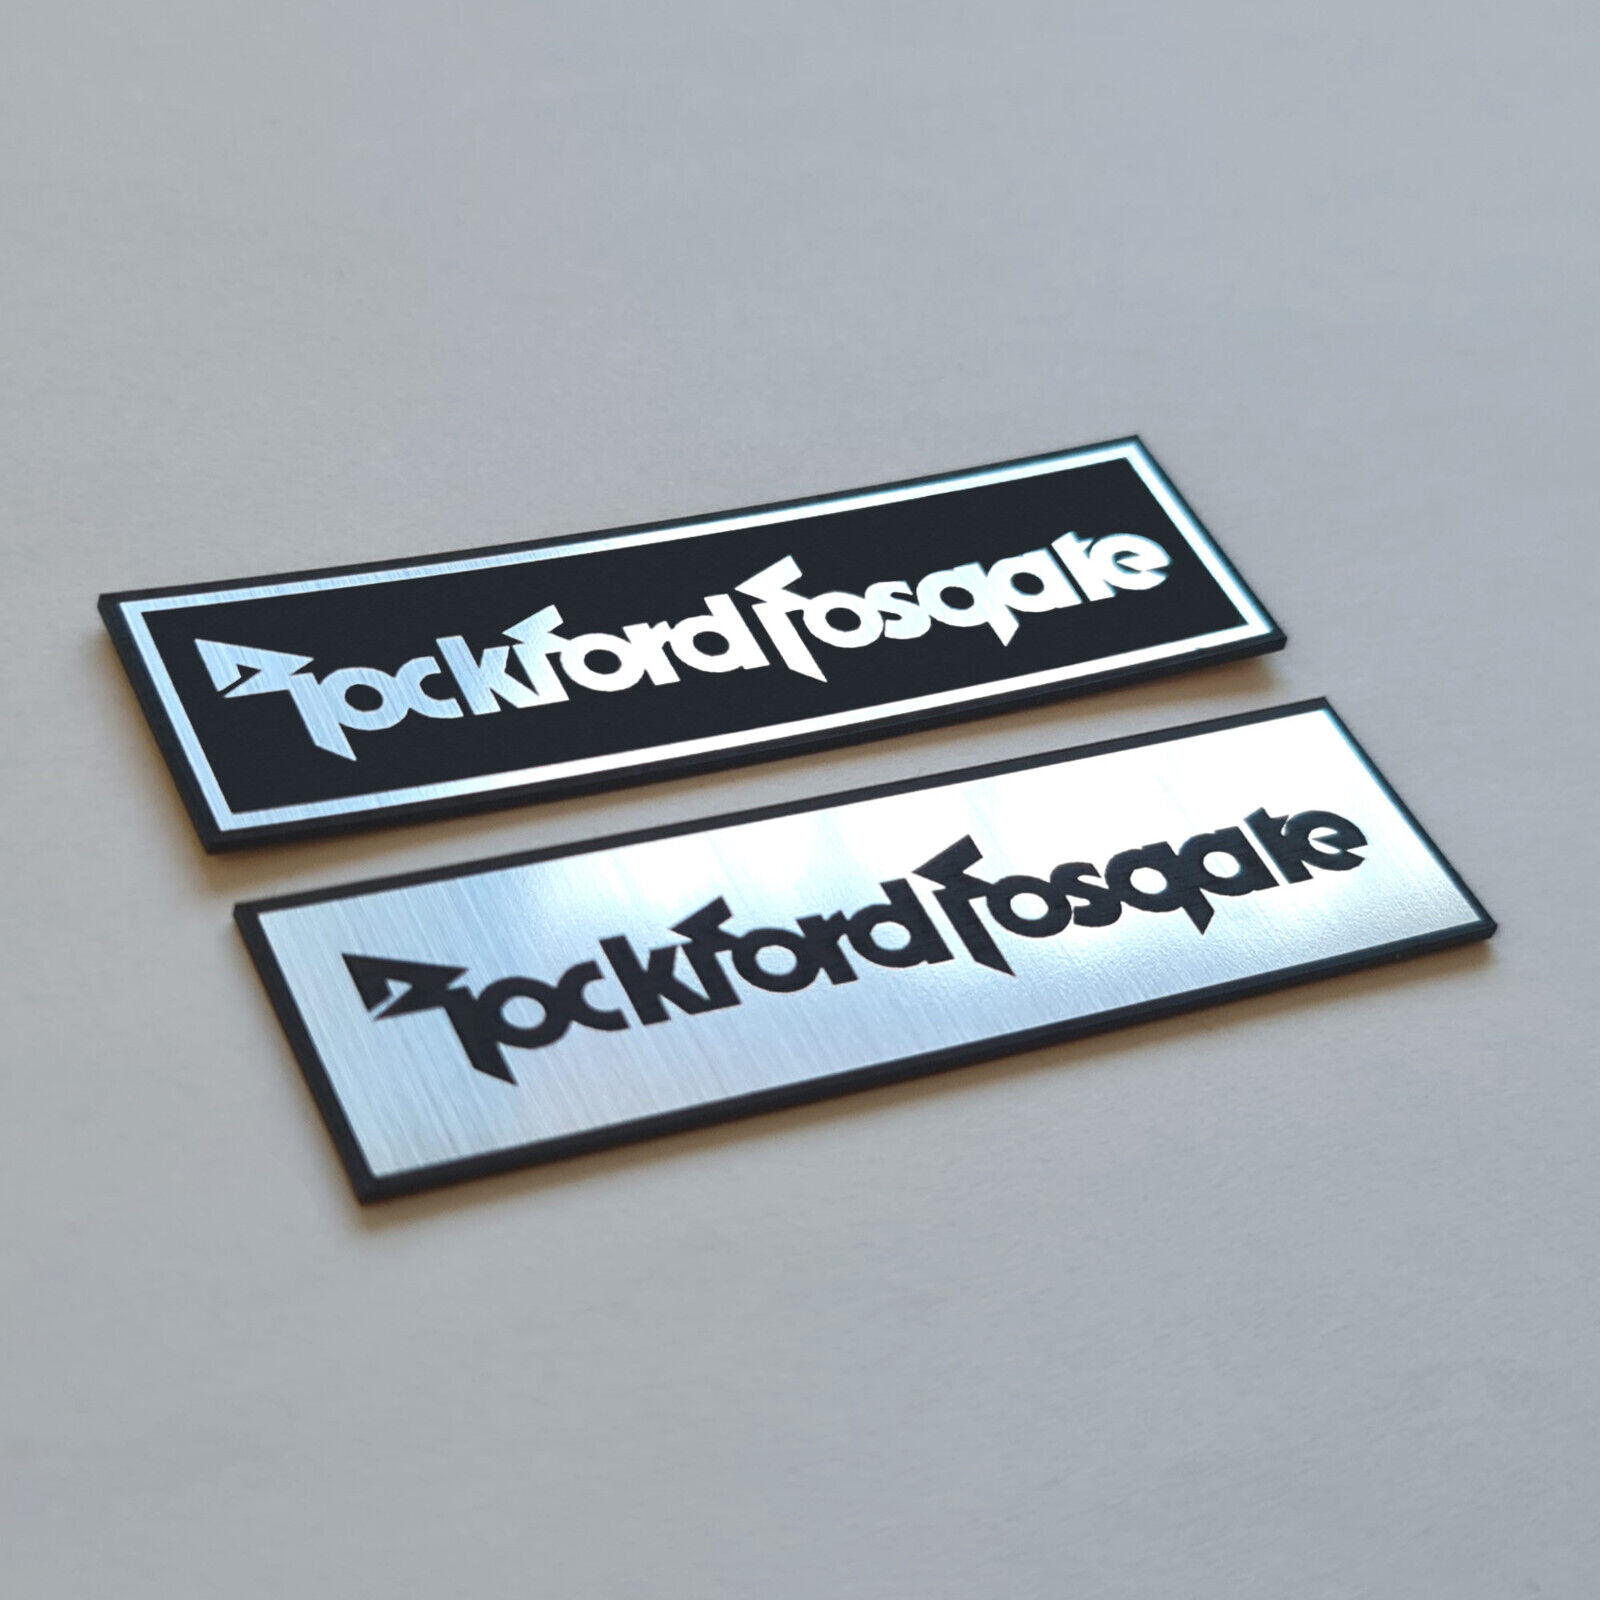 RockFord Fosgate - Sticker Case Badge Emblem - Chrome Reflective - Two Emblems